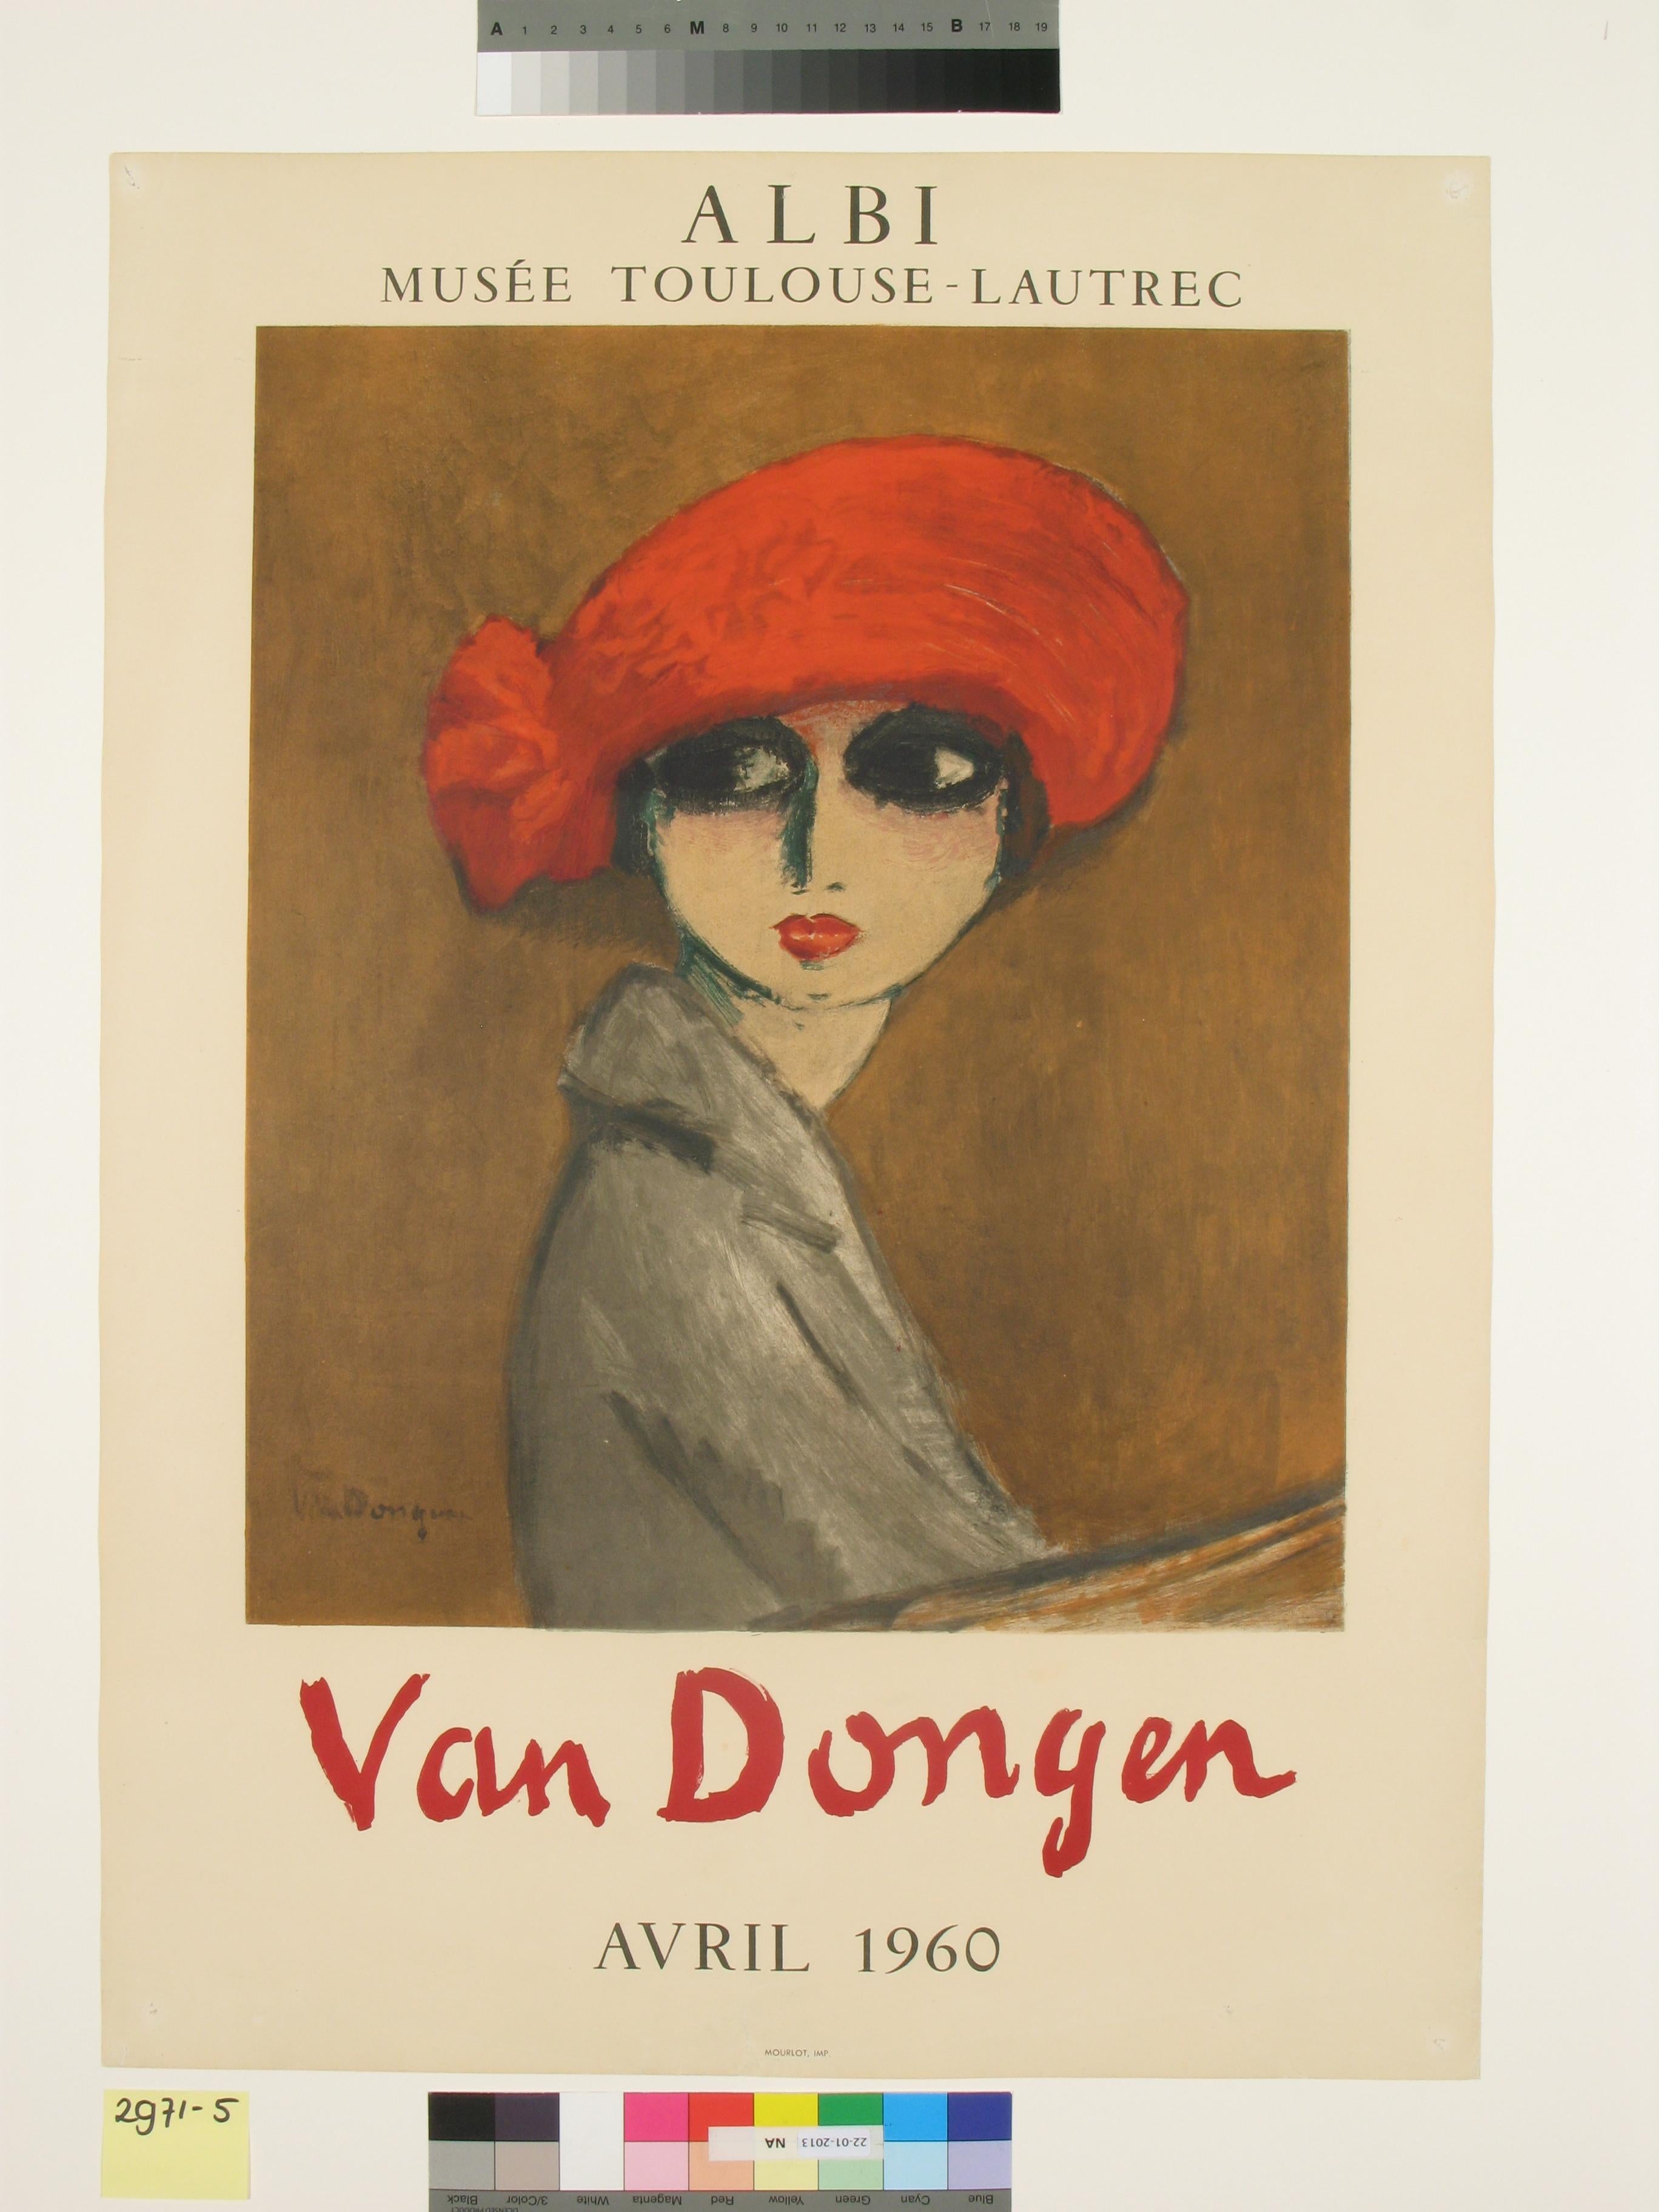 Le Coquelicot - Modern Print by Kees van Dongen